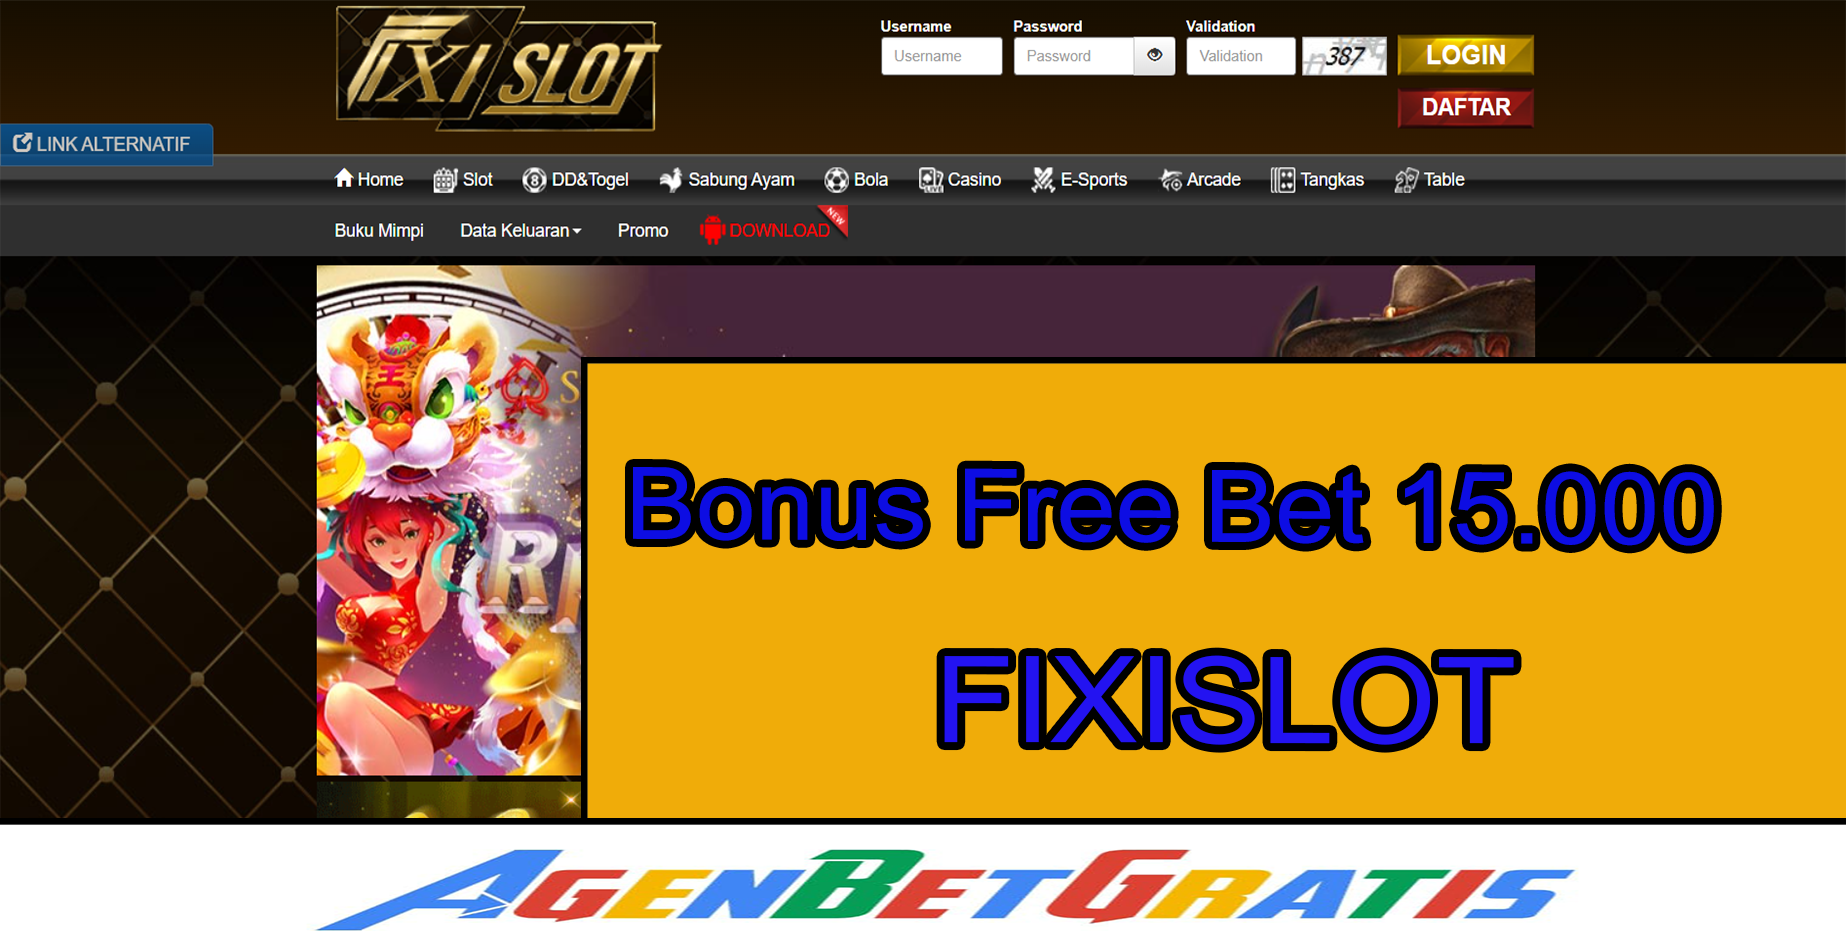 FIXISLOT - Bonus FreeBet 15.000